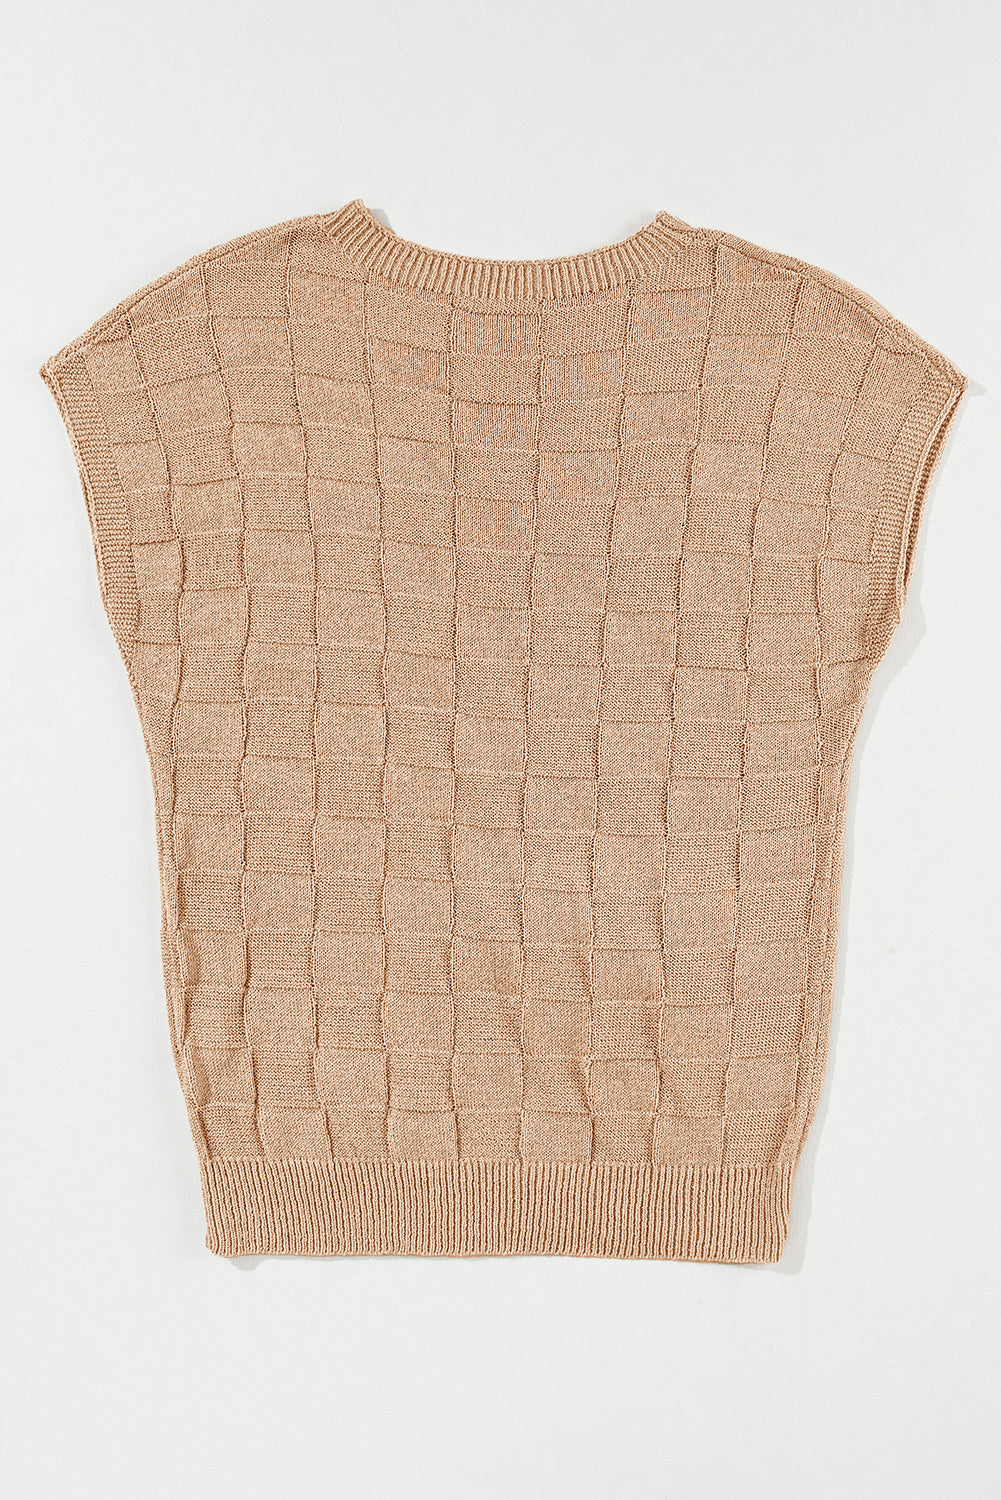 Smoke Gray Lattice Textured Knit Short Sleeve Sweater